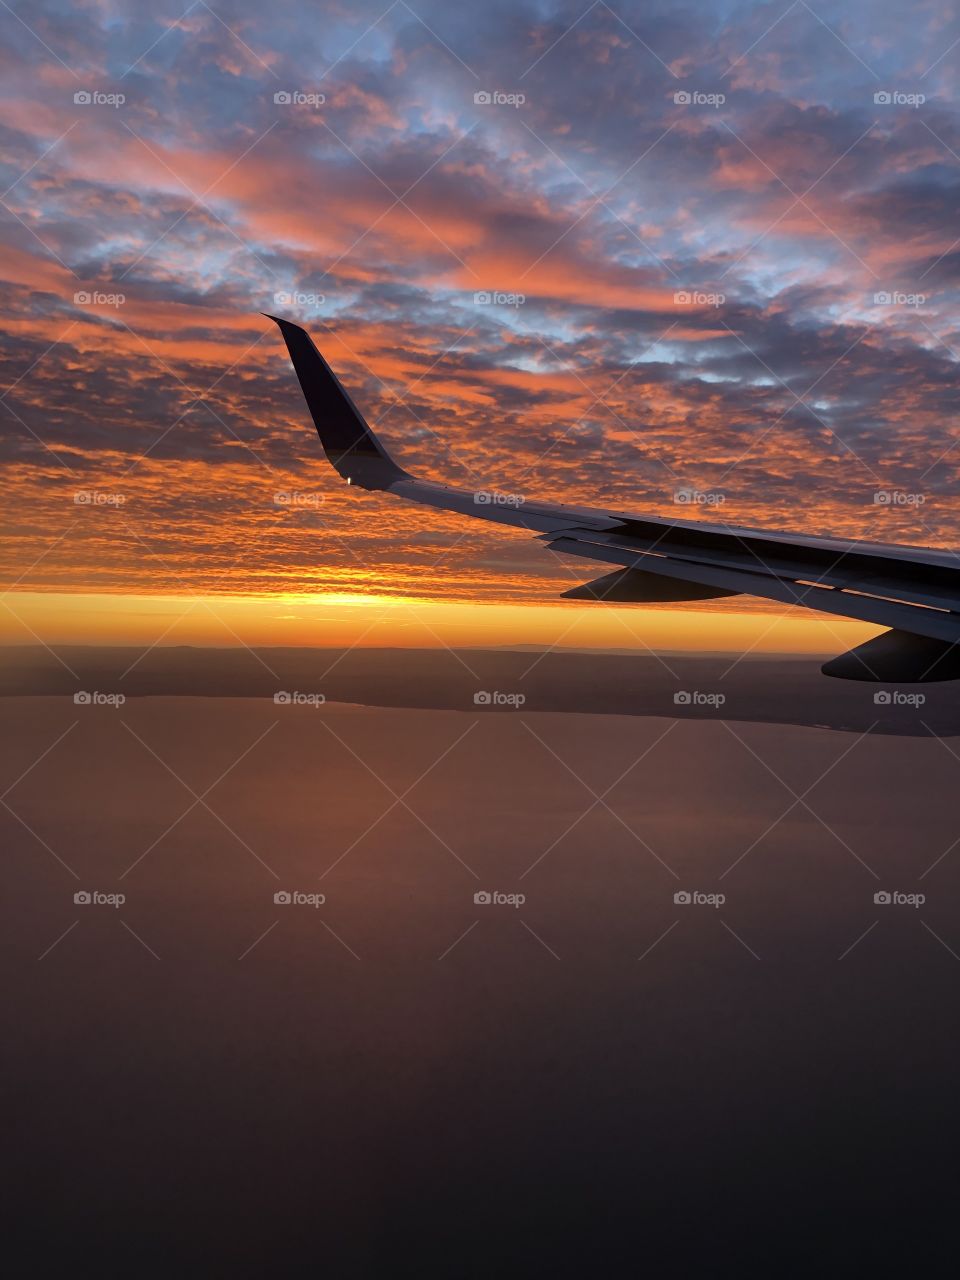 Plane window pic